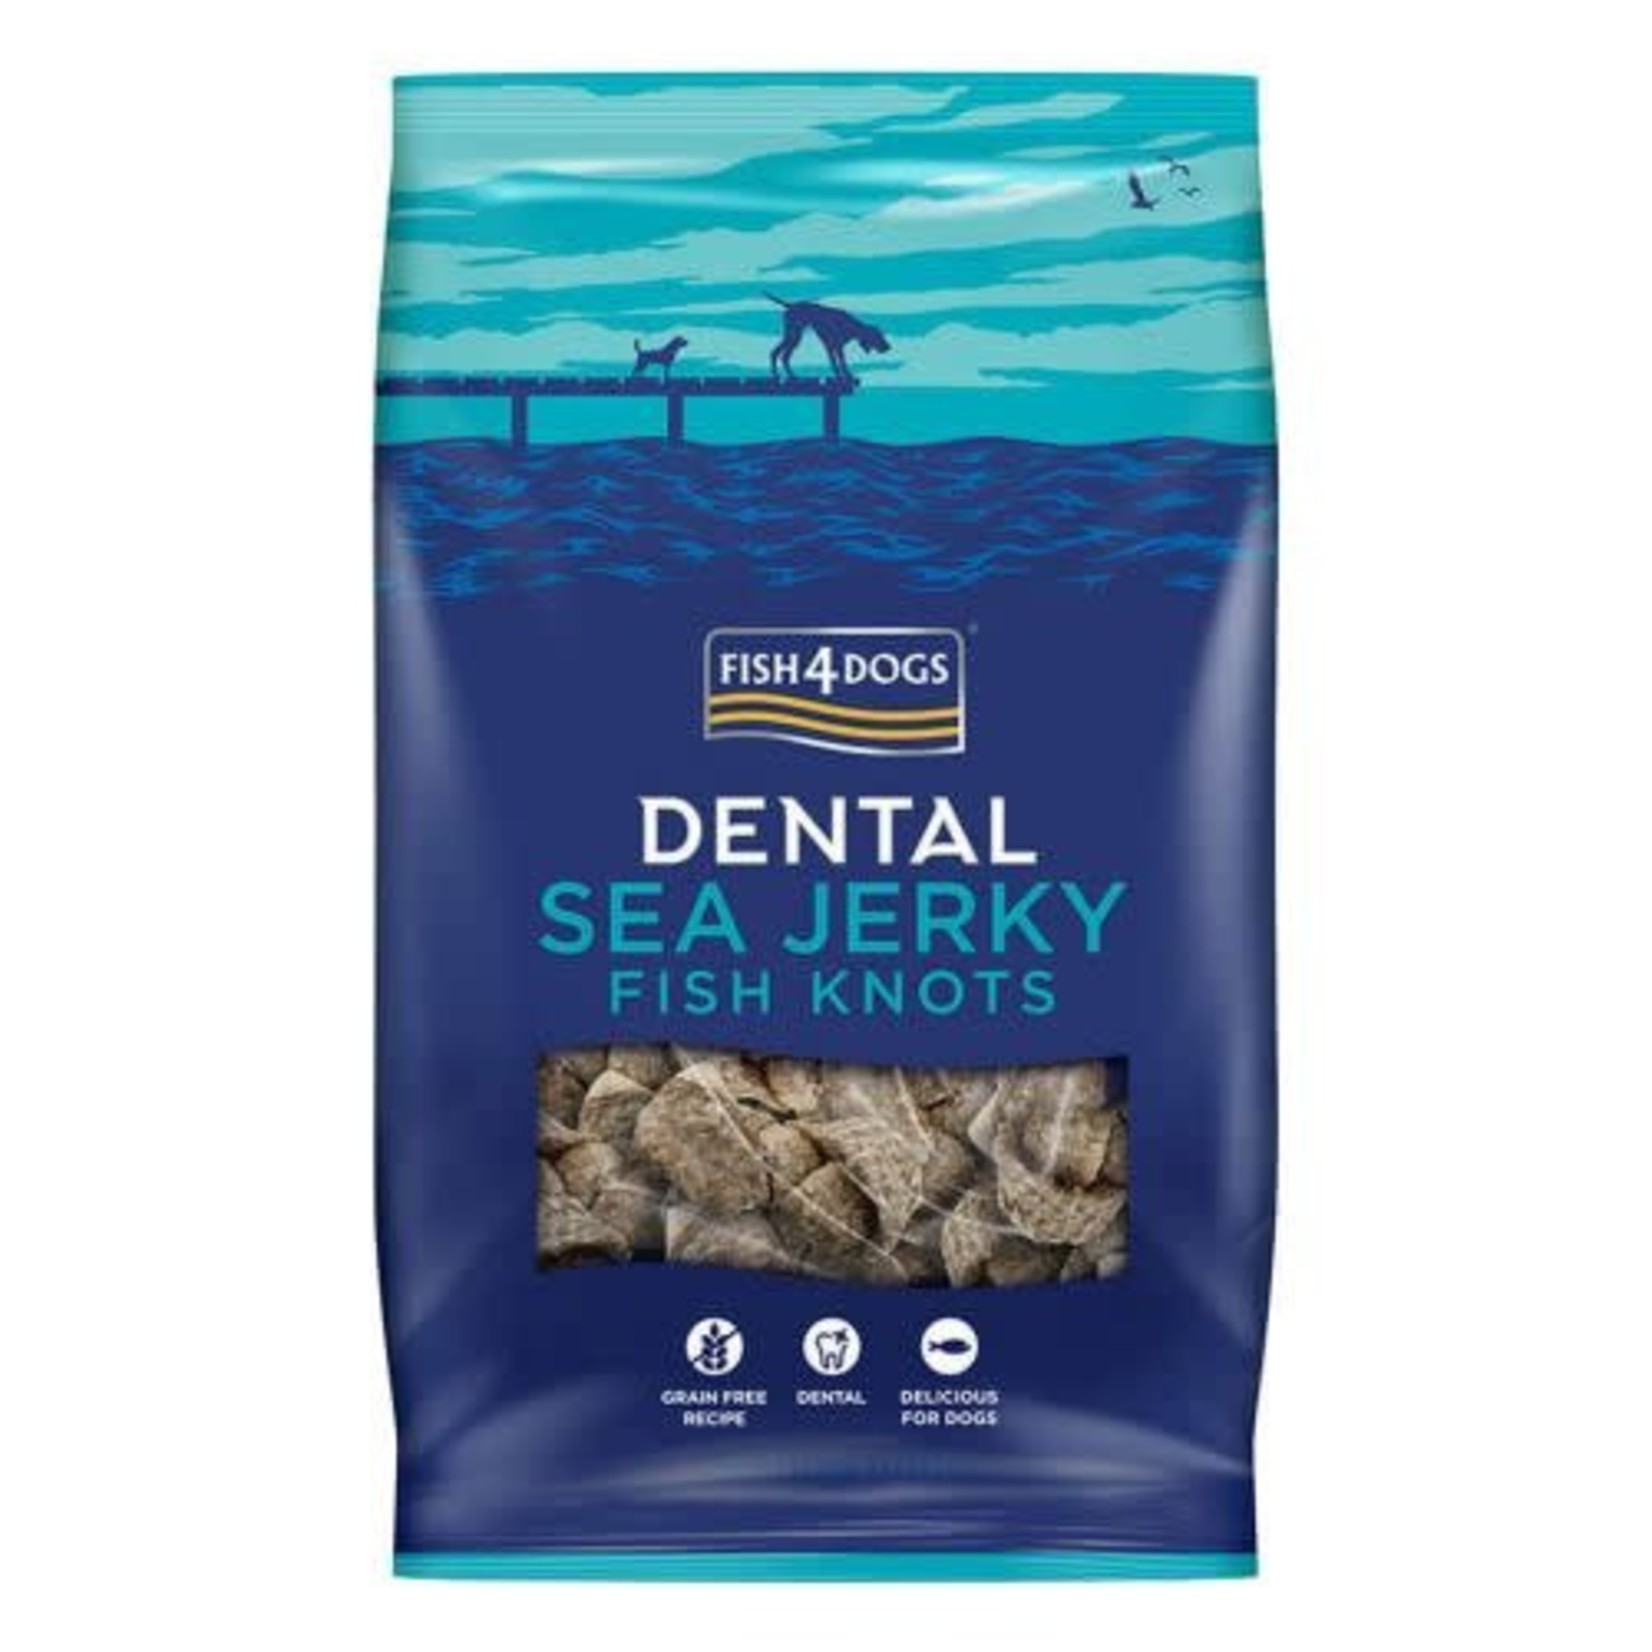 Fish4Dogs Dental Sea Jerky Fish Knots Dog Chews, 100g